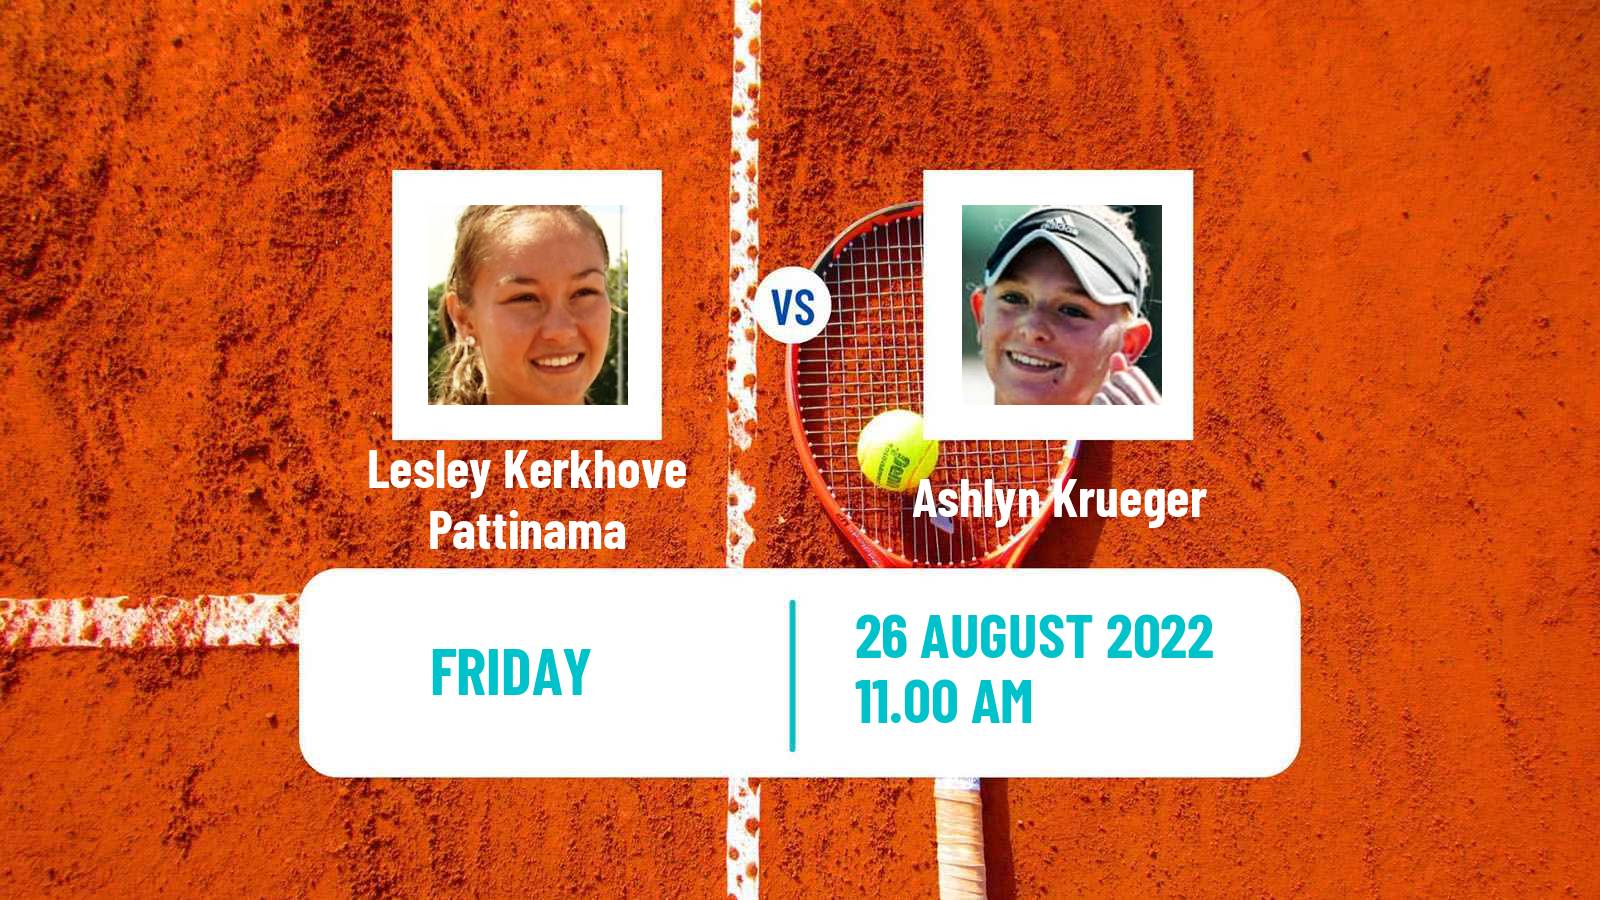 Tennis WTA US Open Lesley Kerkhove Pattinama - Ashlyn Krueger